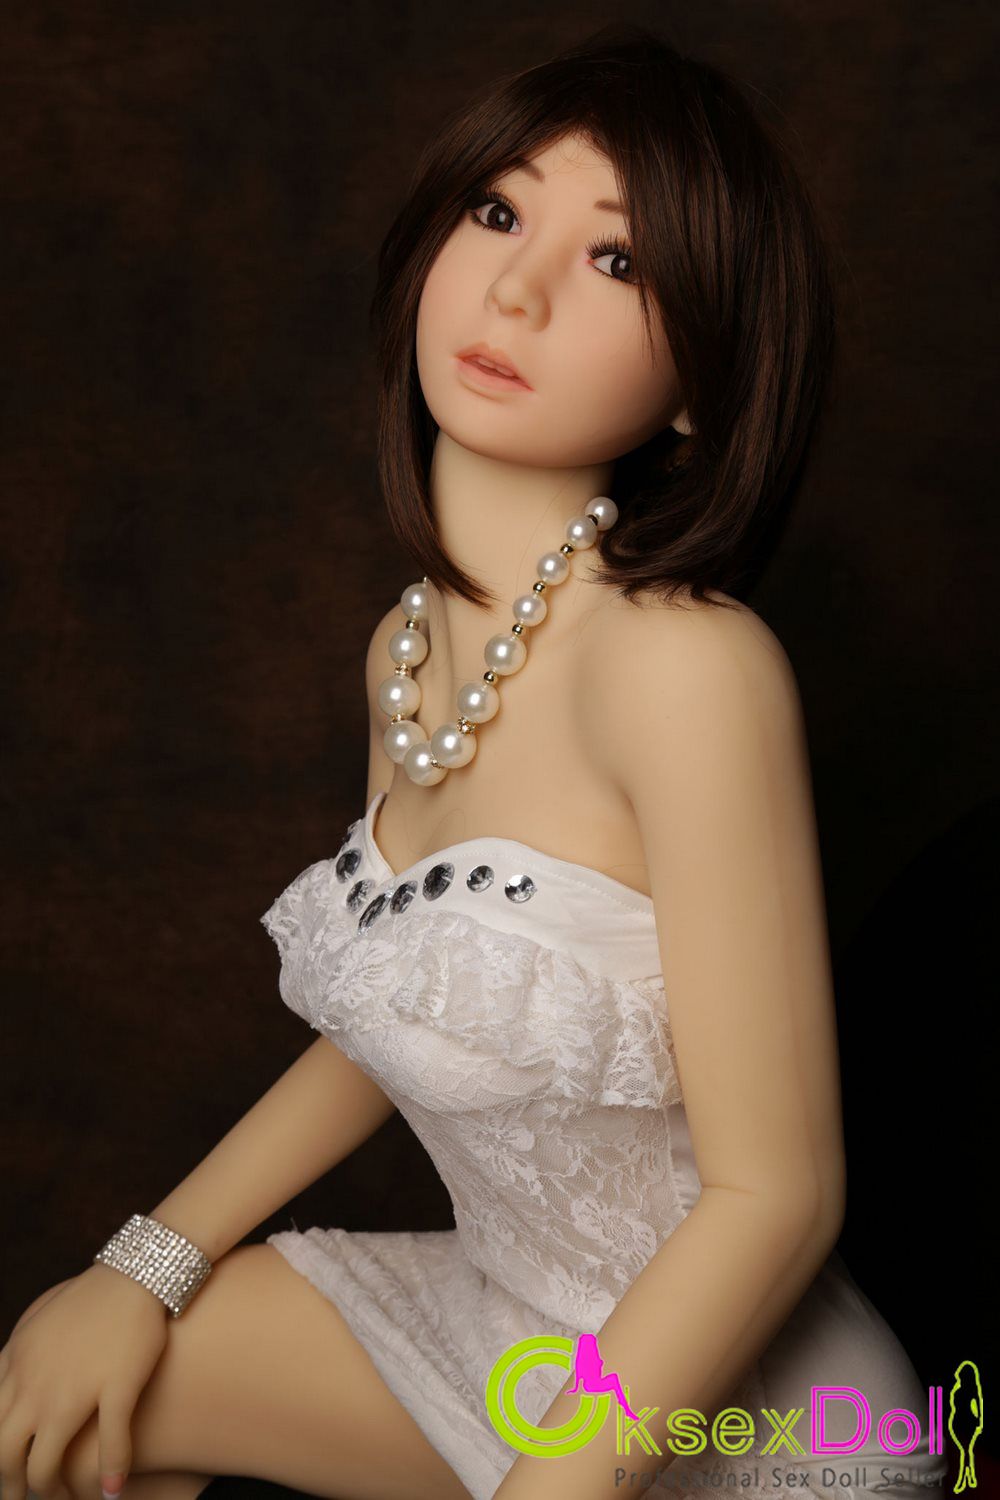 Japanese Beautiful Sex Dolls images